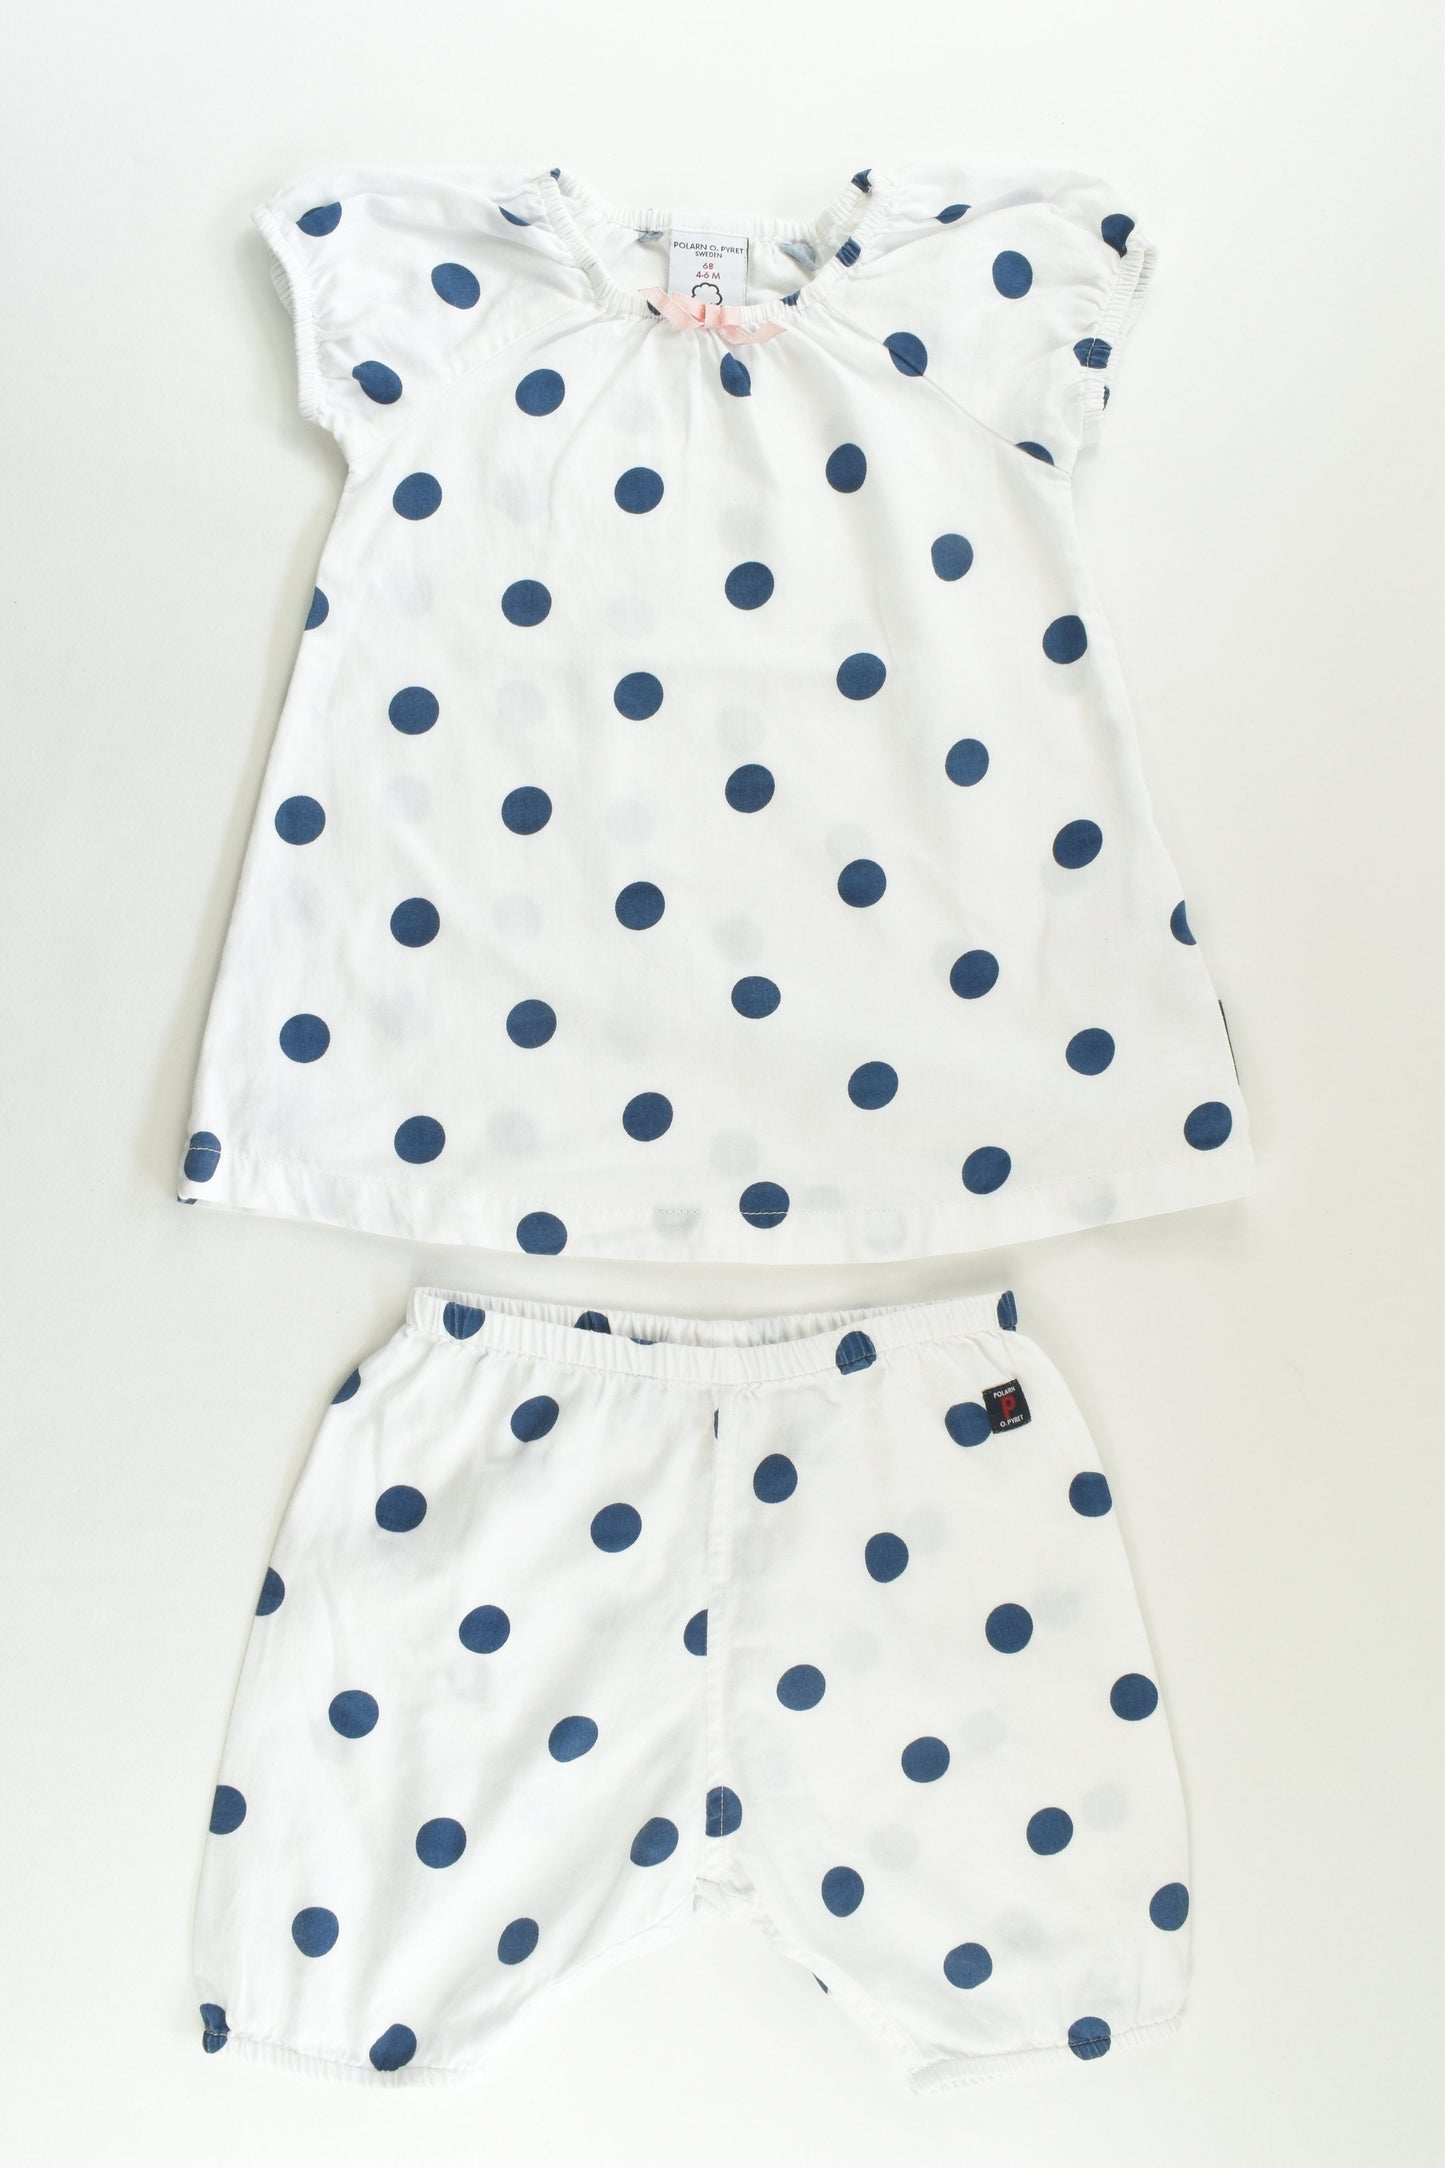 Polarn O. Pyret Size 00 (68 cm) Polka Dots Outfit